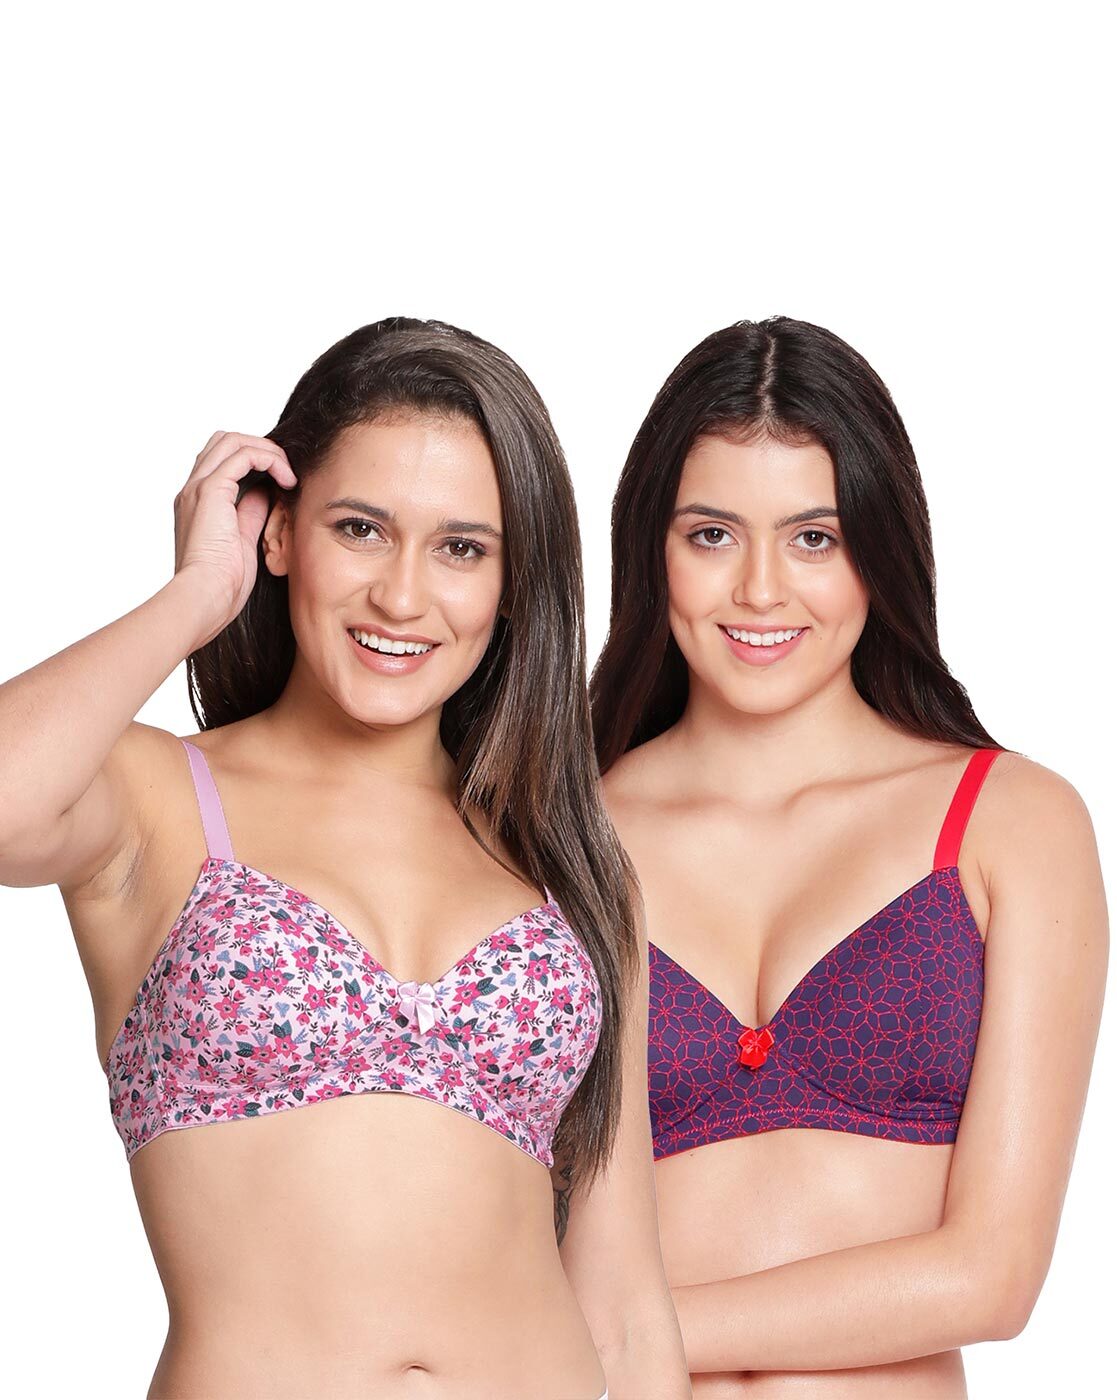 38B Bra size, Buy 38B Size Bras Online in India at Shyaway, 38b bra